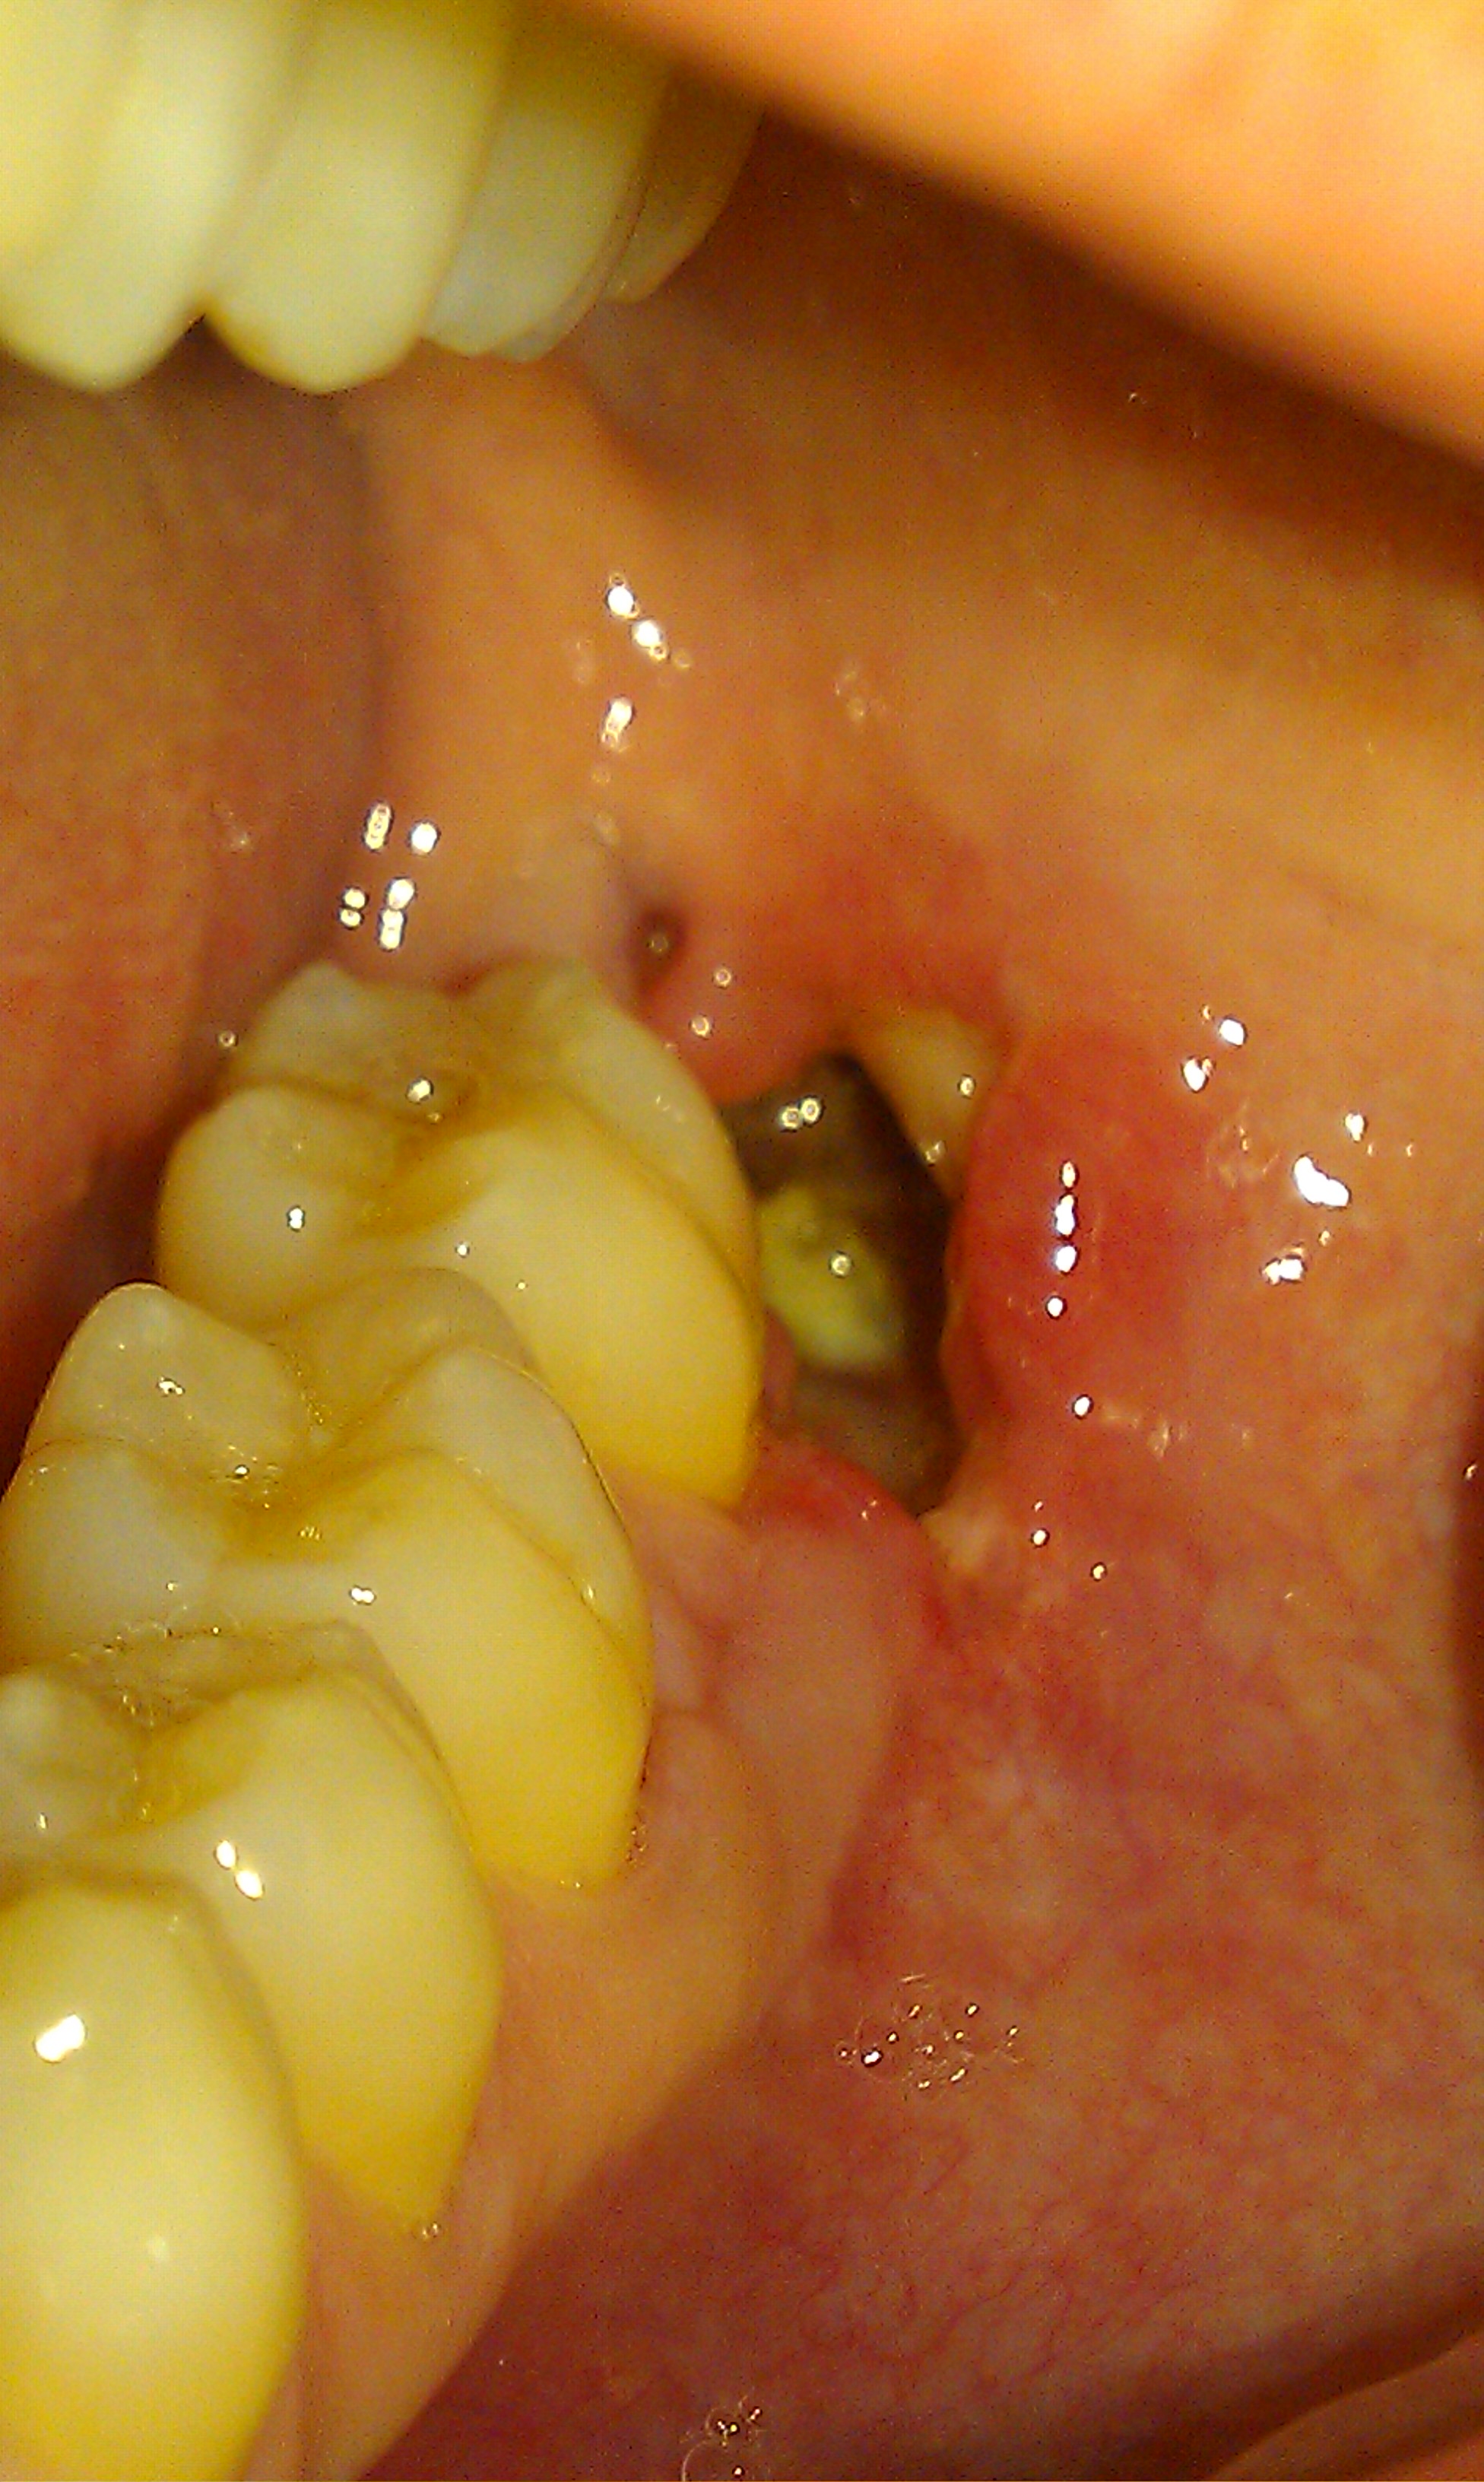 Alveolar osteitis (dry socket) after mandibular wisdom tooth extraction.